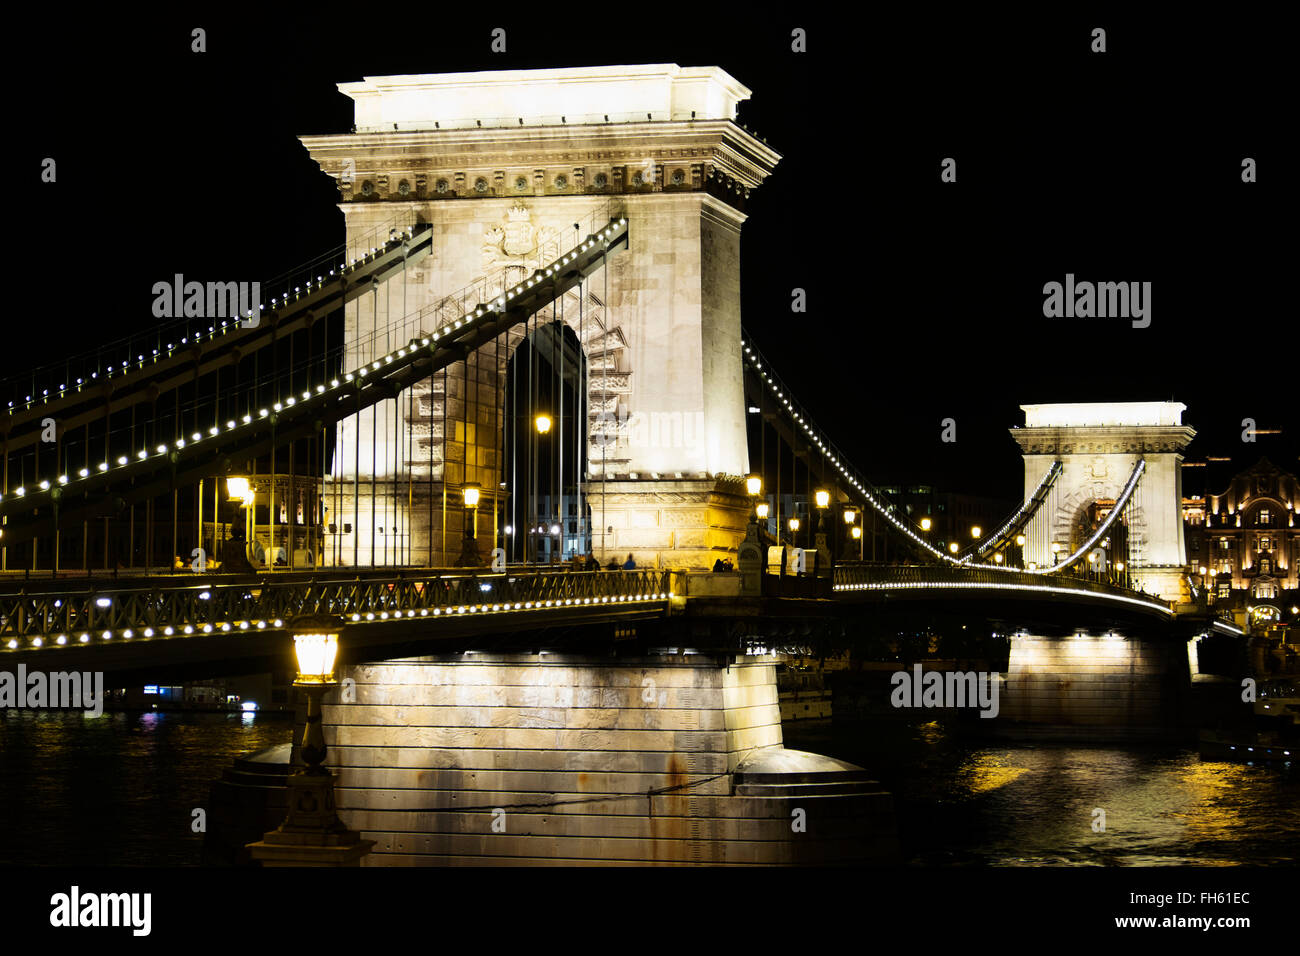 Arches of Szechenyi Chain Bridge Illuminated at Night, Budapest, Hungary Stock Photo